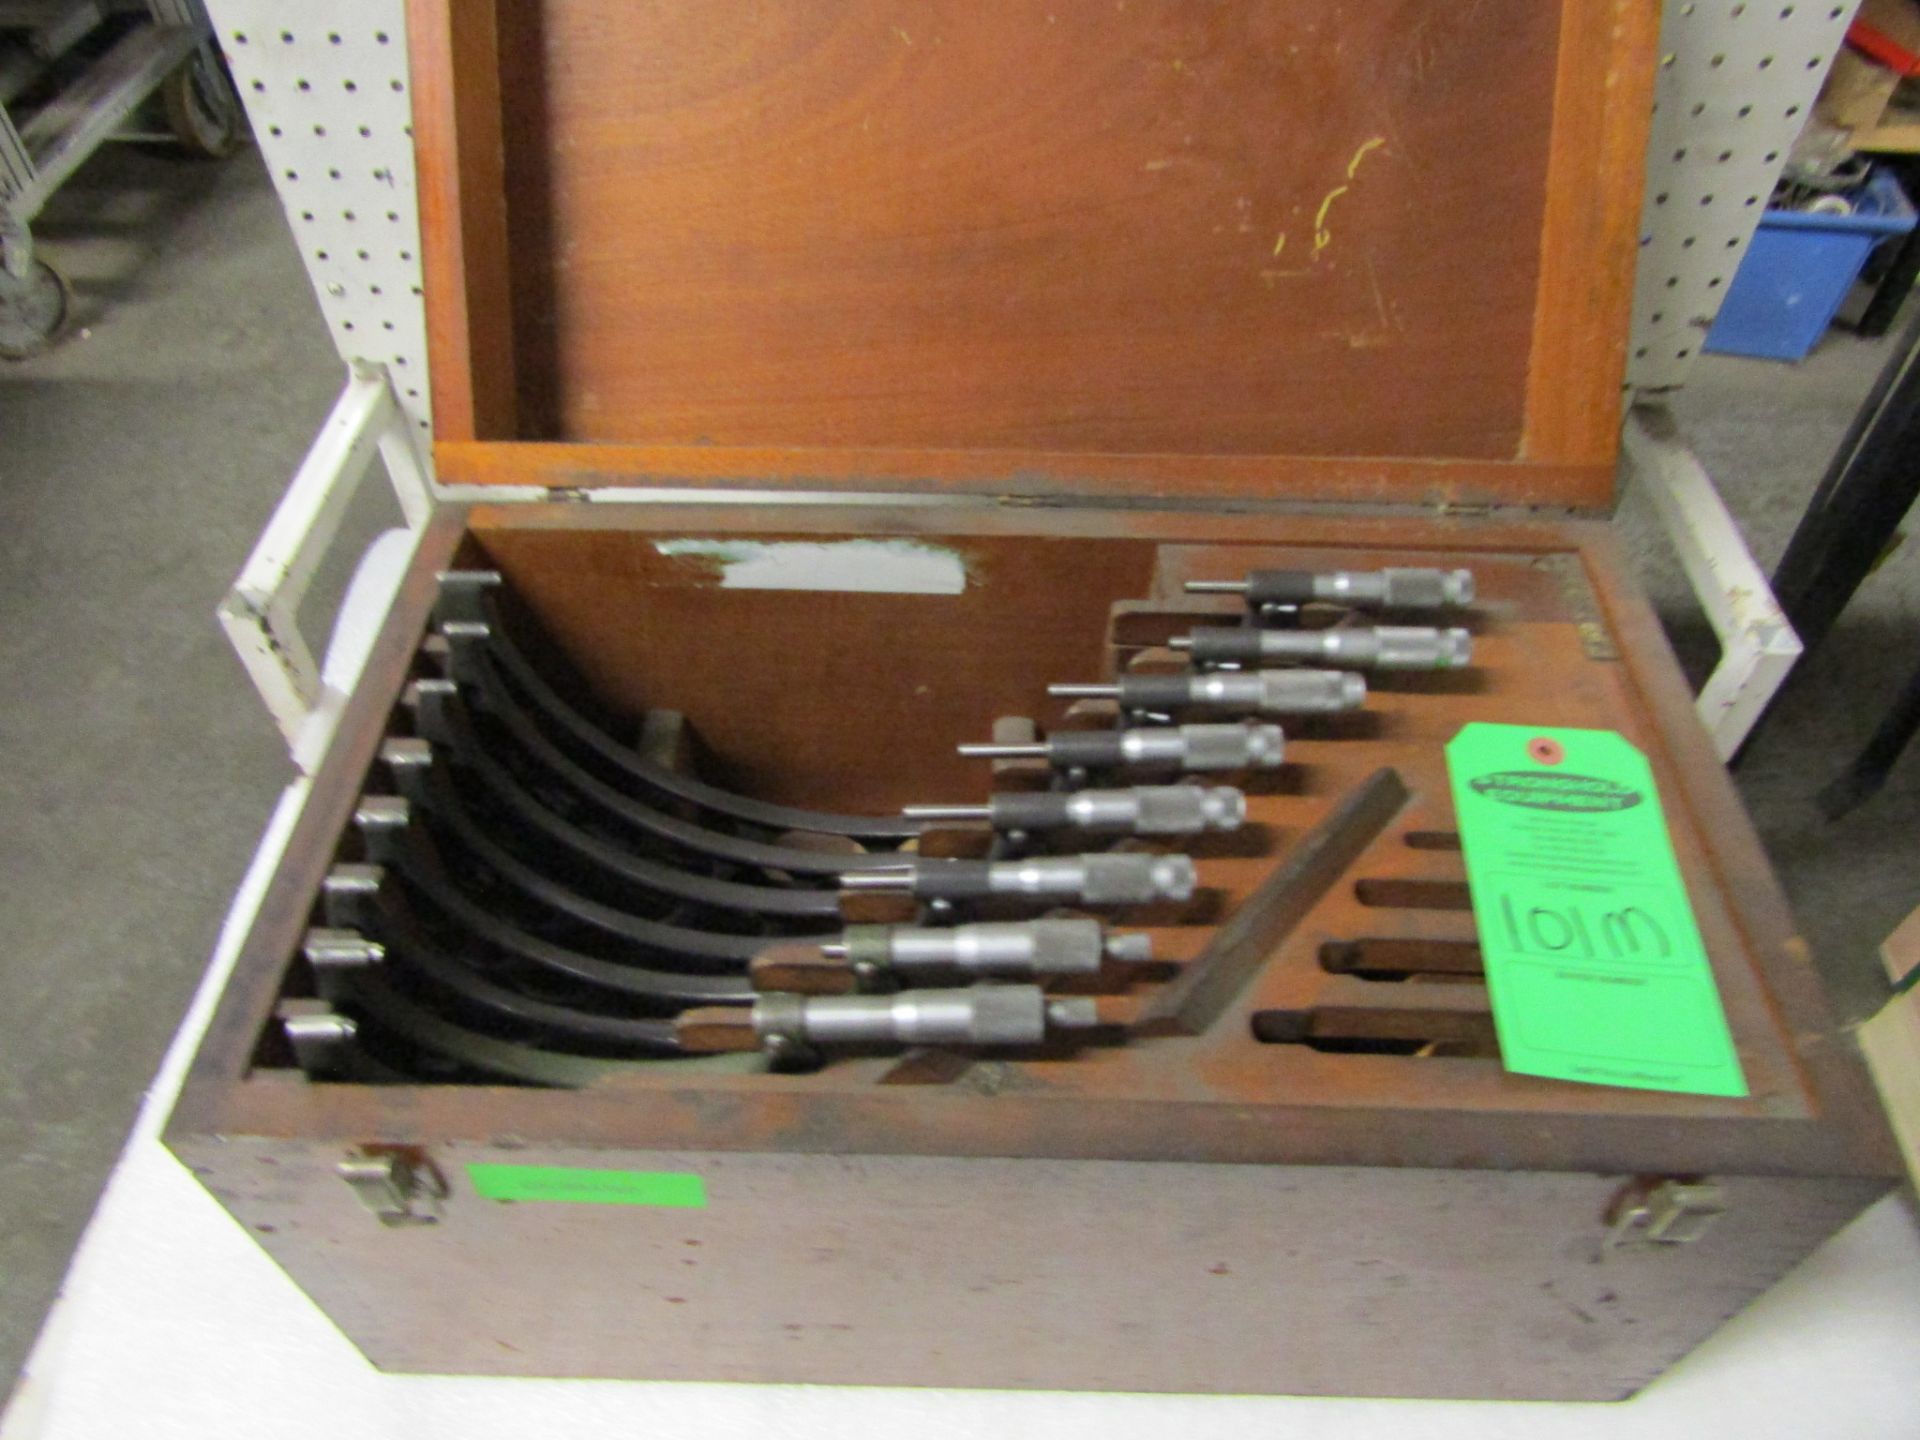 Lot of 8 (8 units) Outside Micrometer Set 2-12" range - Brown &Sharpe Units - Image 2 of 2